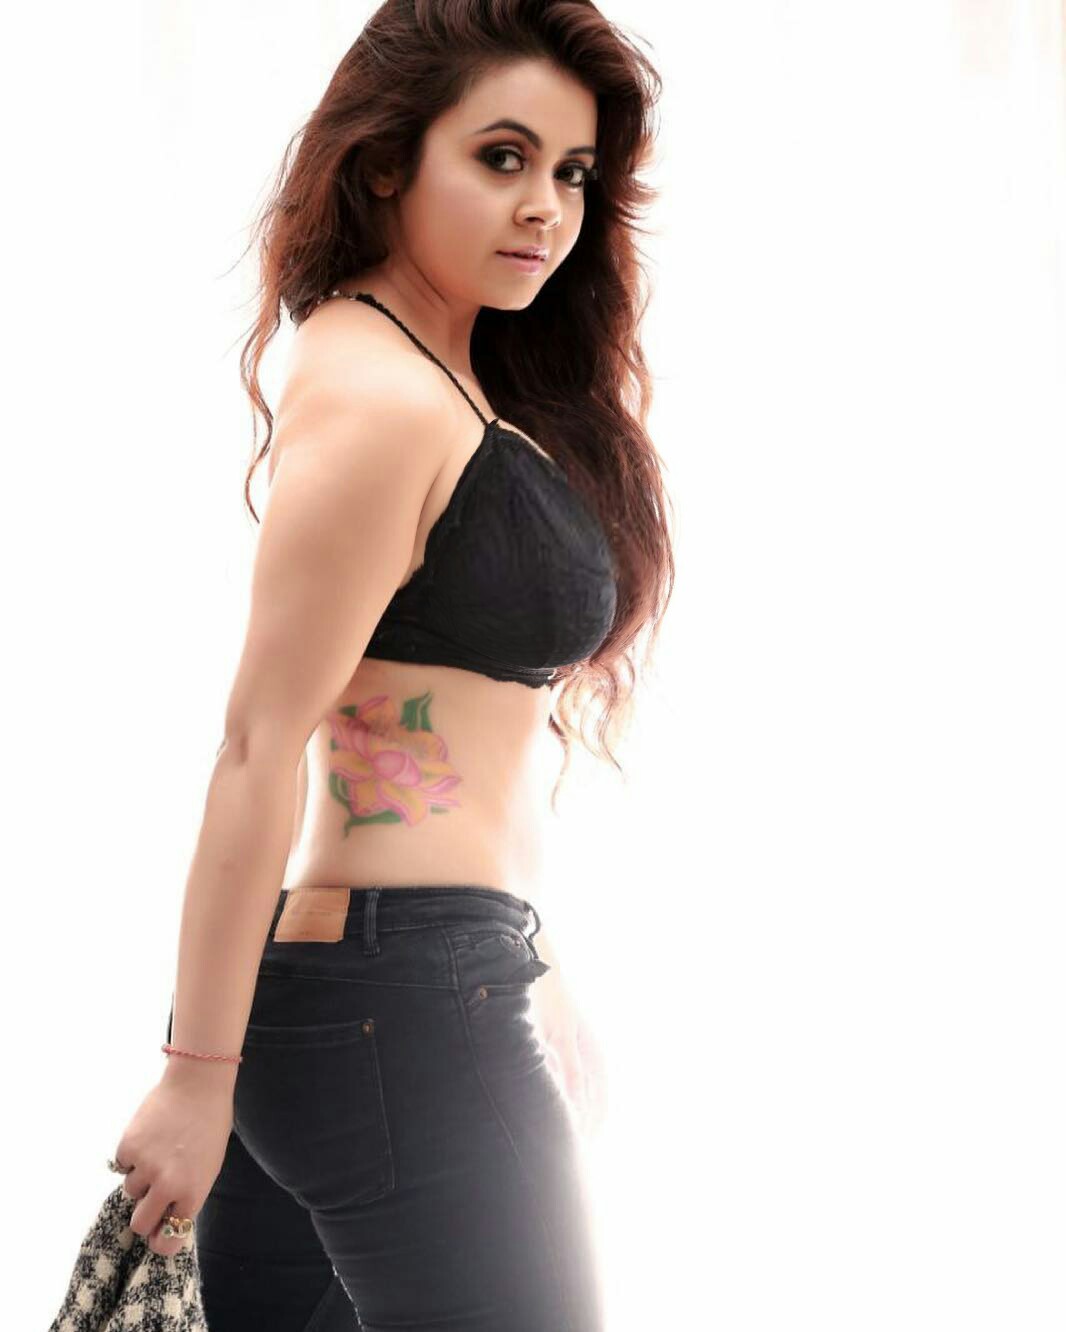 Gopi Sex Video - Devoleena Bhattacharjee Hot Bikini Photoshoot HD | Devoleena Hot ...